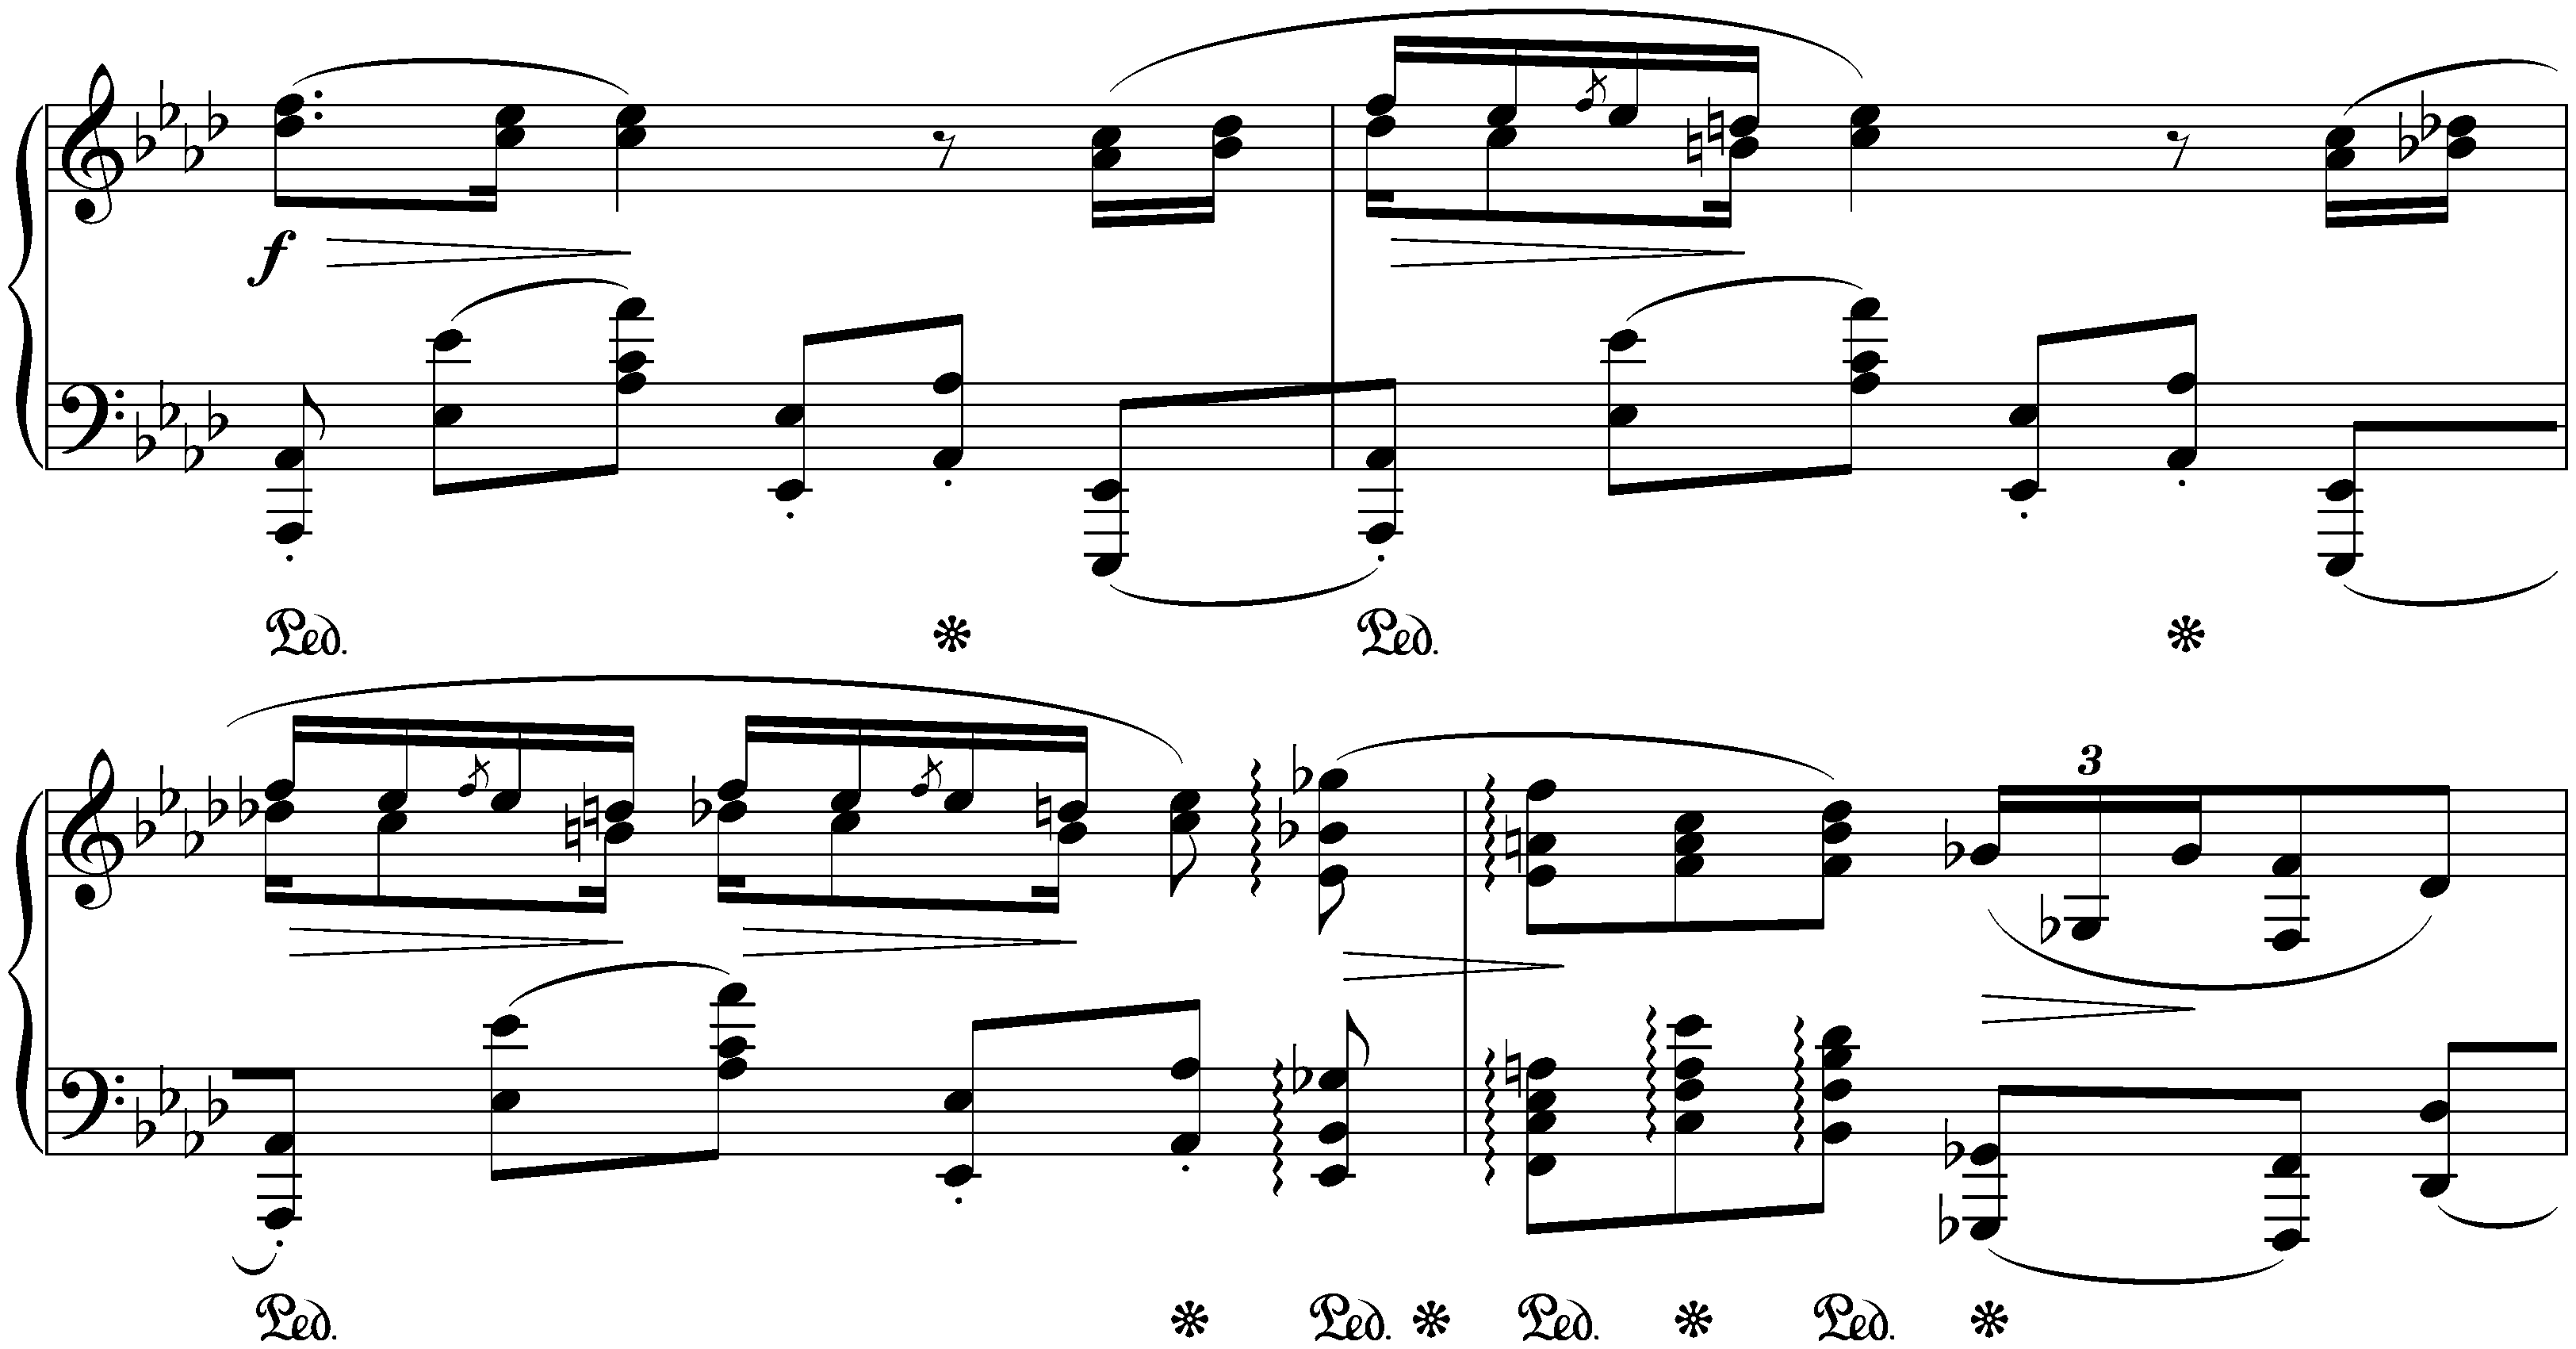 Polonaise in A-flat major, op. 53